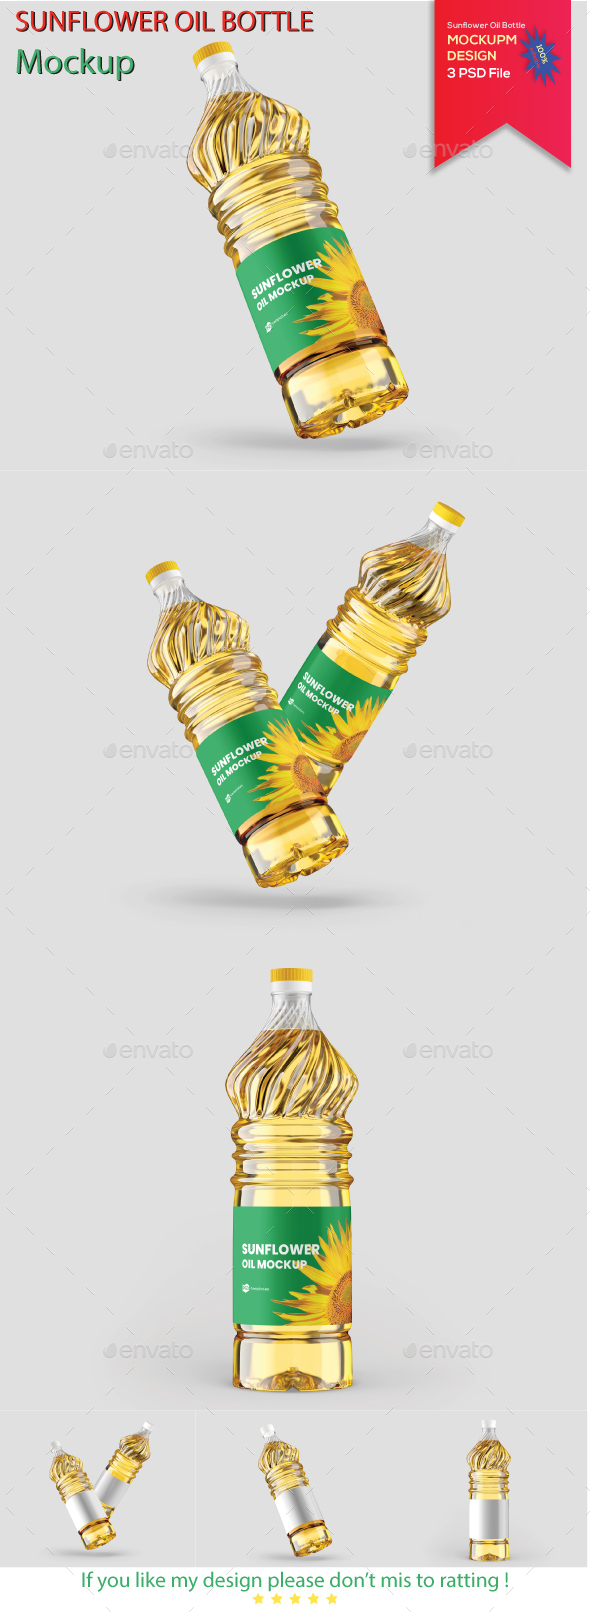 [DOWNLOAD]Sunflower Oil Bottle Mockup